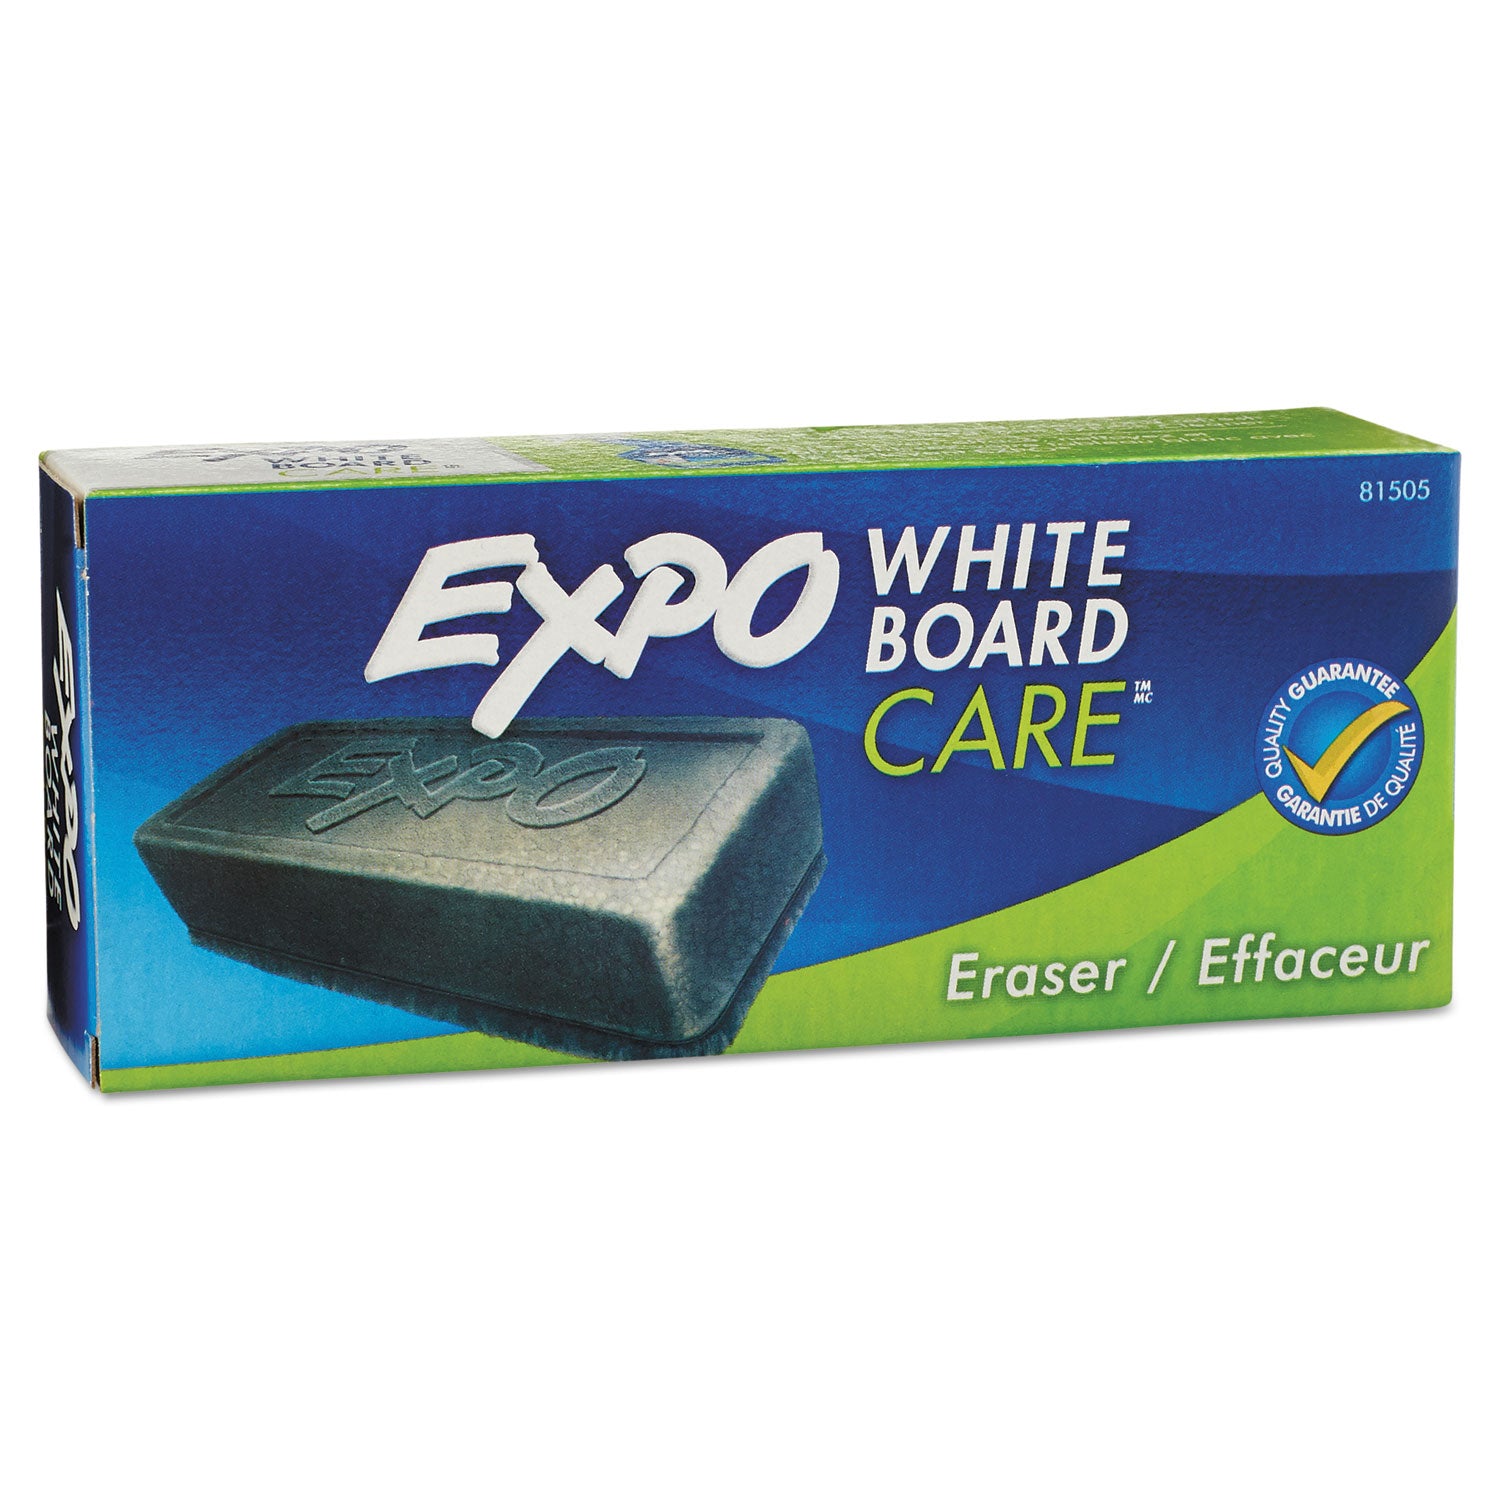 White Board CARE Dry Erase Eraser, 5.13" x 1.25 - 